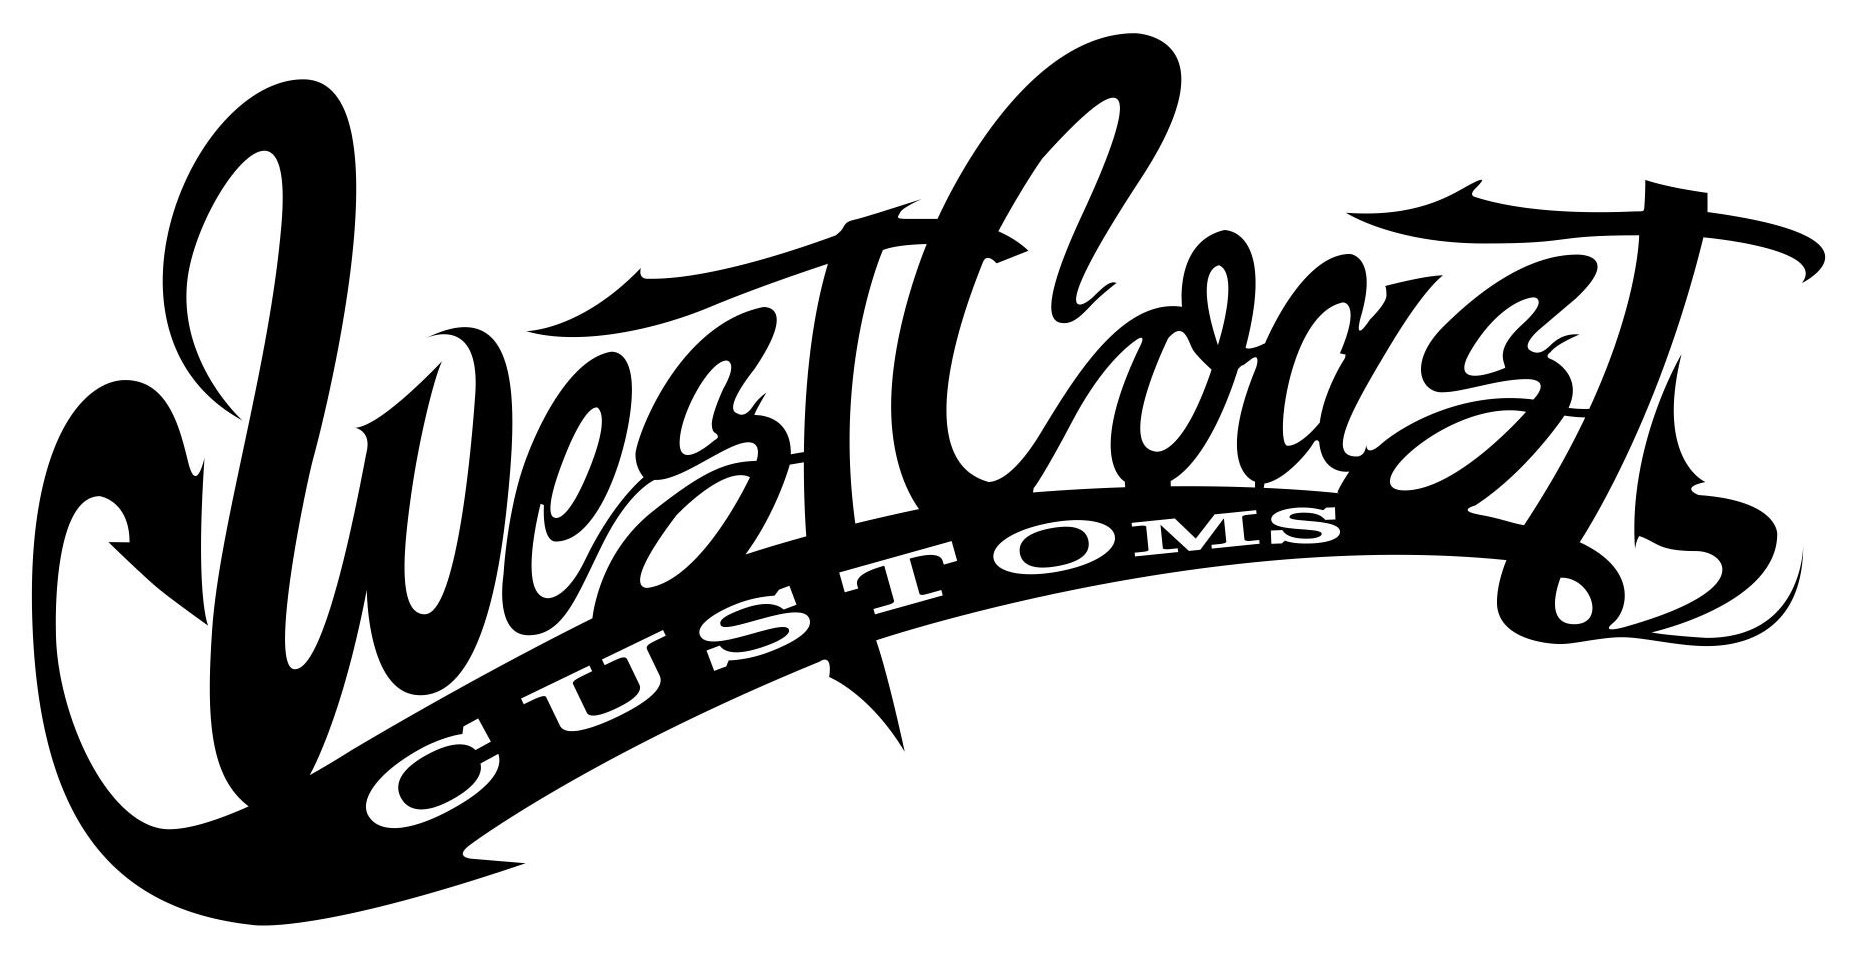 West Coast Customs Logo Font